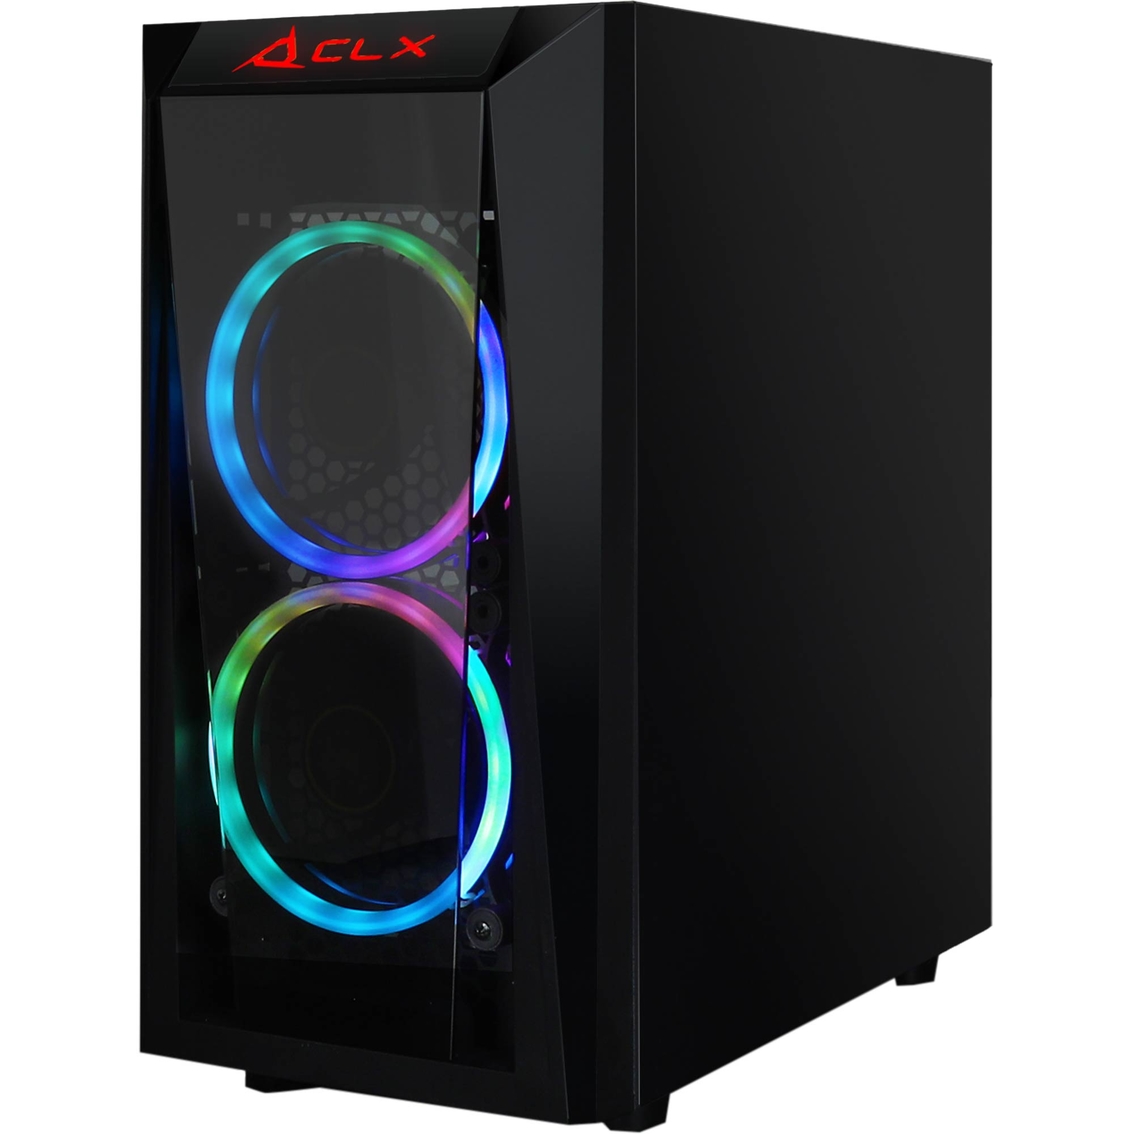 CLX SET VR-Ready AMD Ryzen 7 3.9GHz 16GB RAM 960GB SSD Gaming Desktop - Image 6 of 7